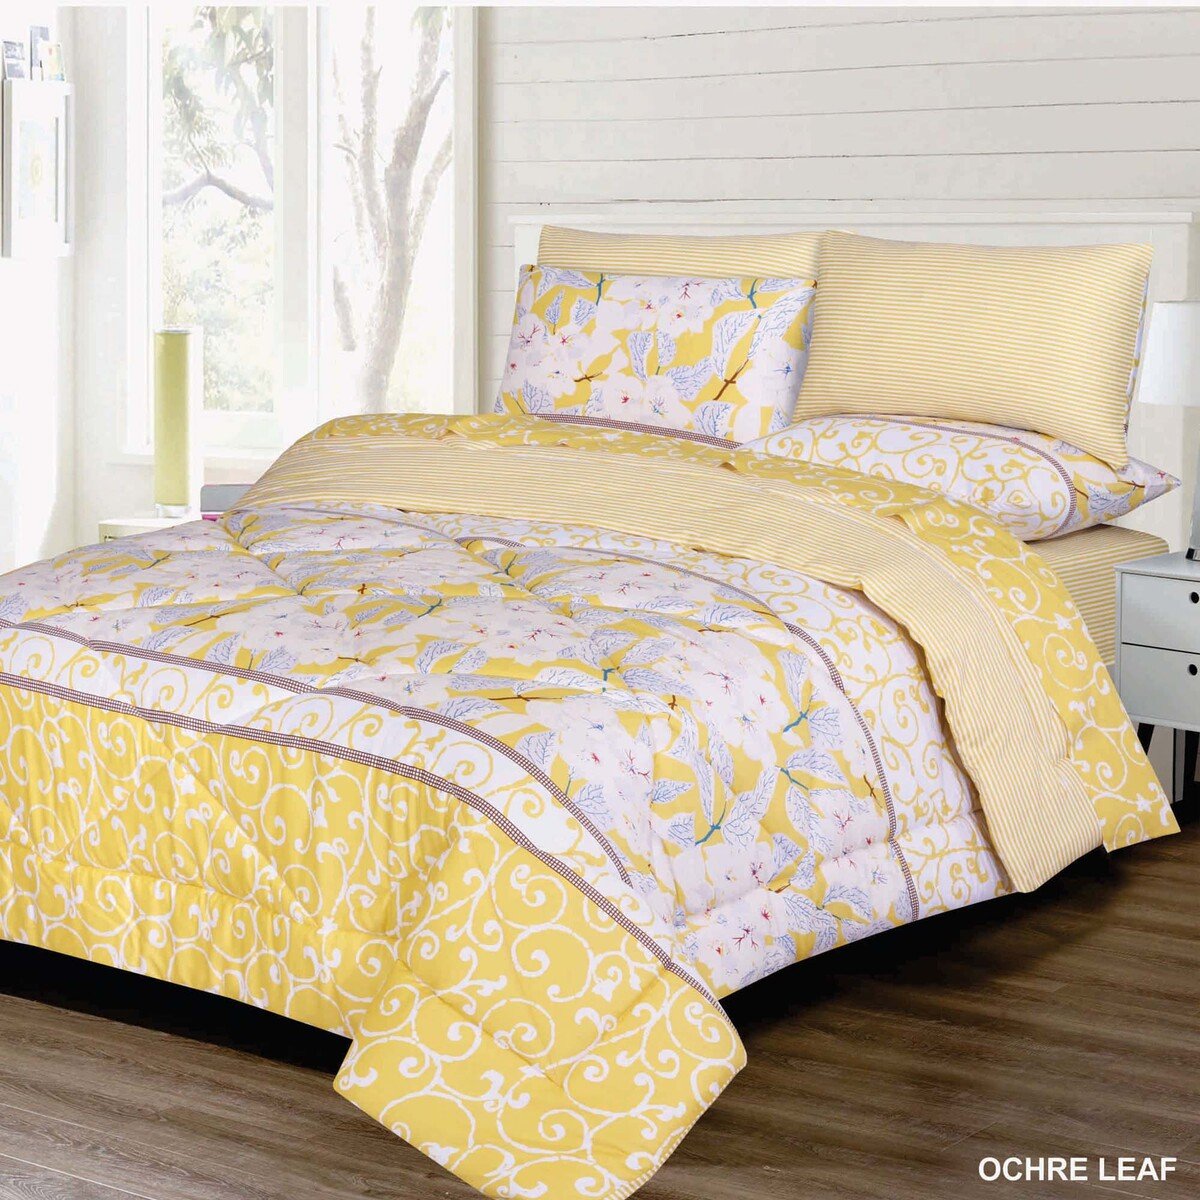 Maple Leaf Comforter Set Queen 6pcs 200 Thread Count Assorted Colors & Designs